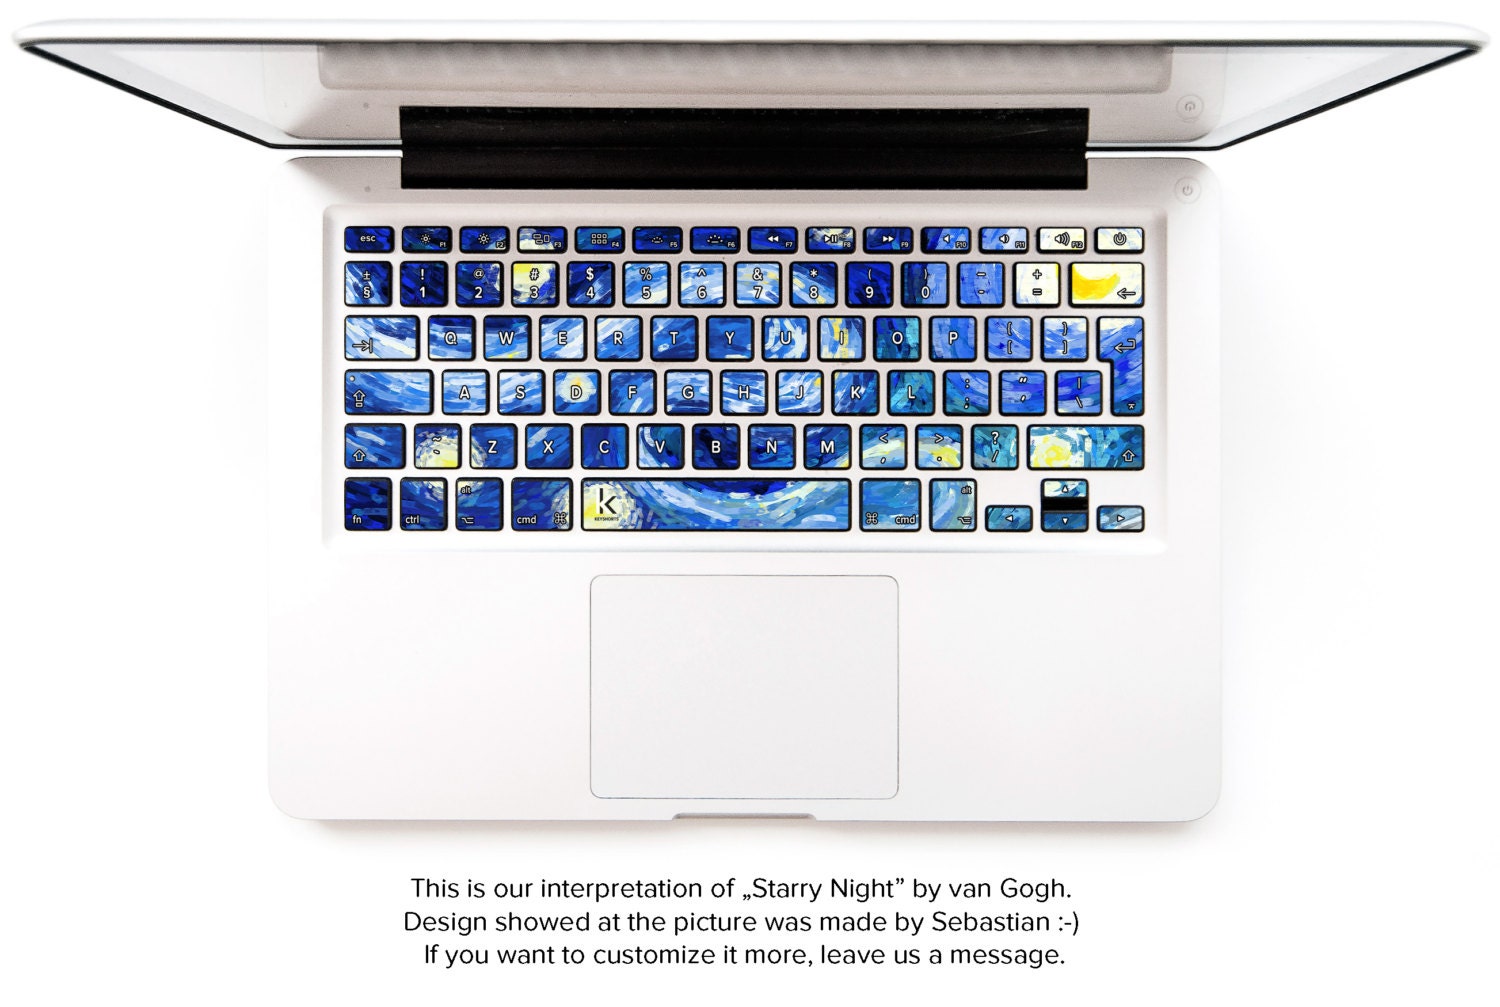 Map Of The World Keyboard Sticker For Windows ... Macbook decal Starry Night van gogh inspired Macbook keyboard stickers macbook pro keyboard sticker macbook air ...